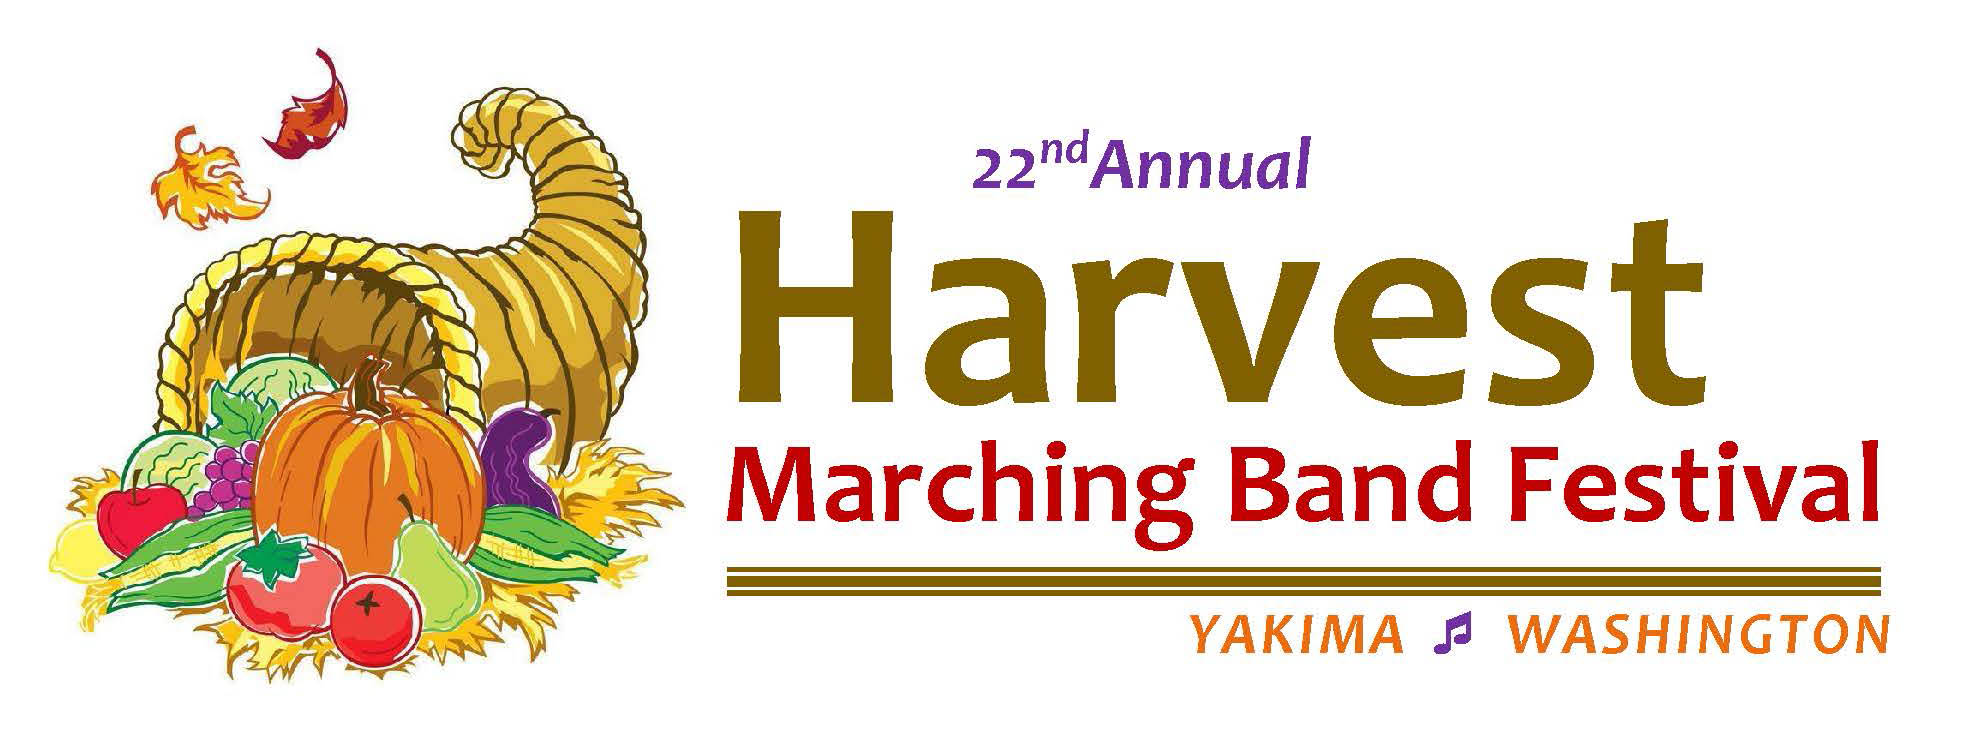 The Harvest Marching Band Festival Logo